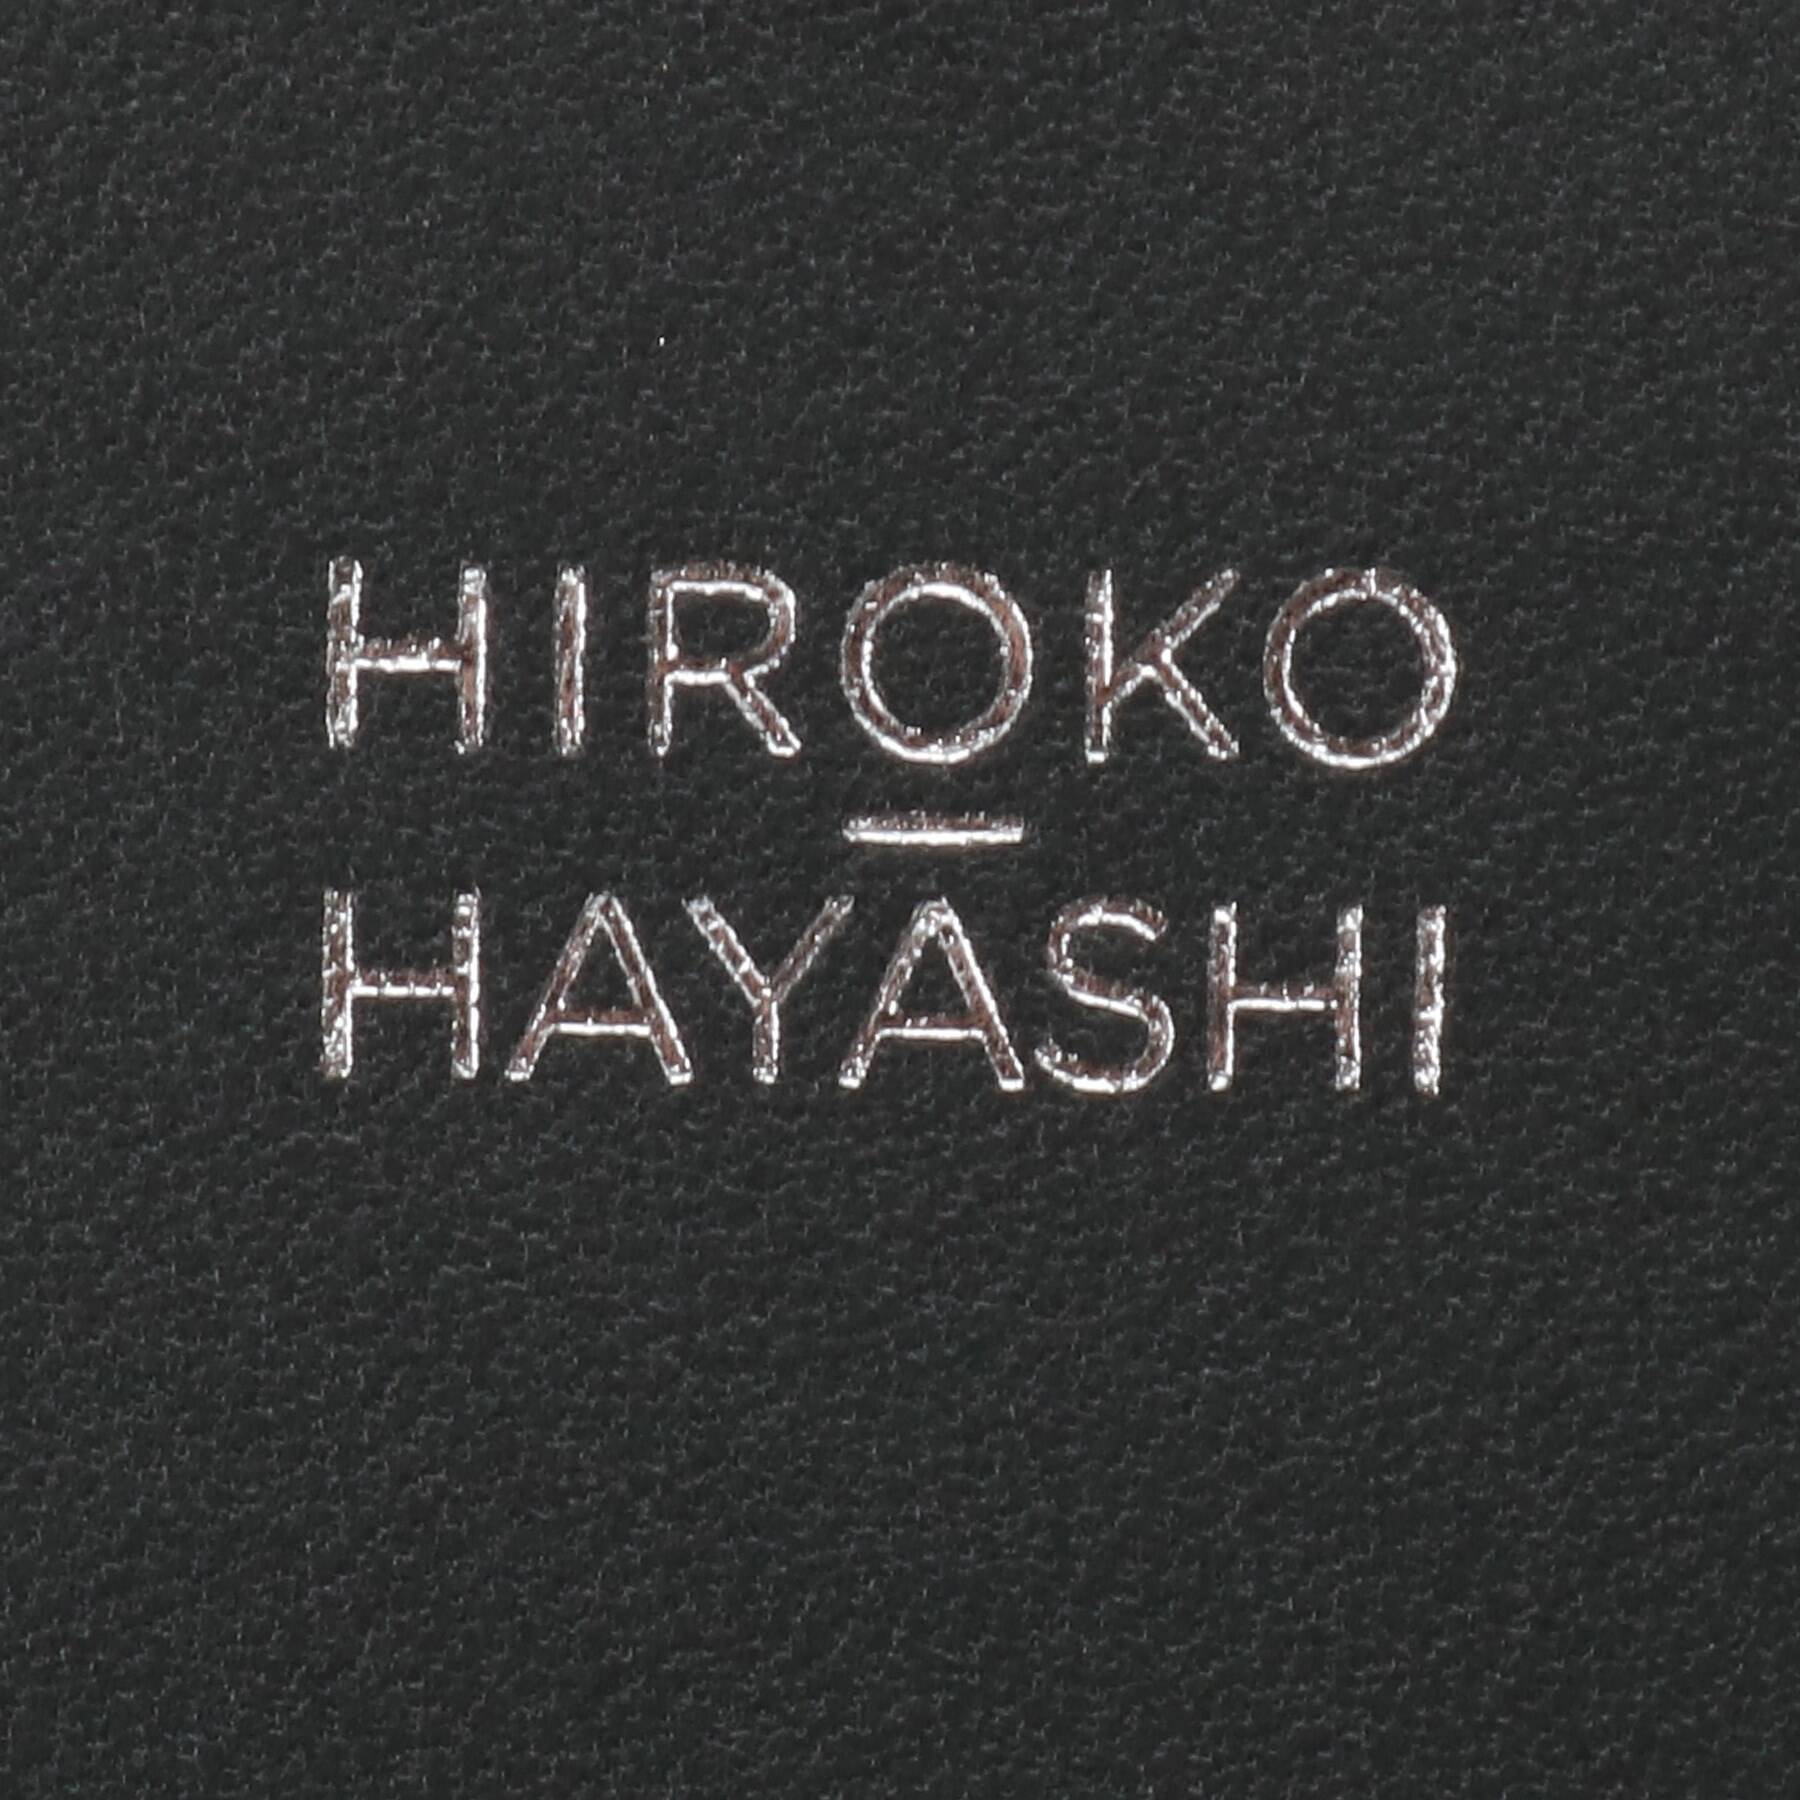 PLATINO(プラーティノ)薄型二つ折り財布|HIROKO HAYASHI(ヒロコ ハヤシ